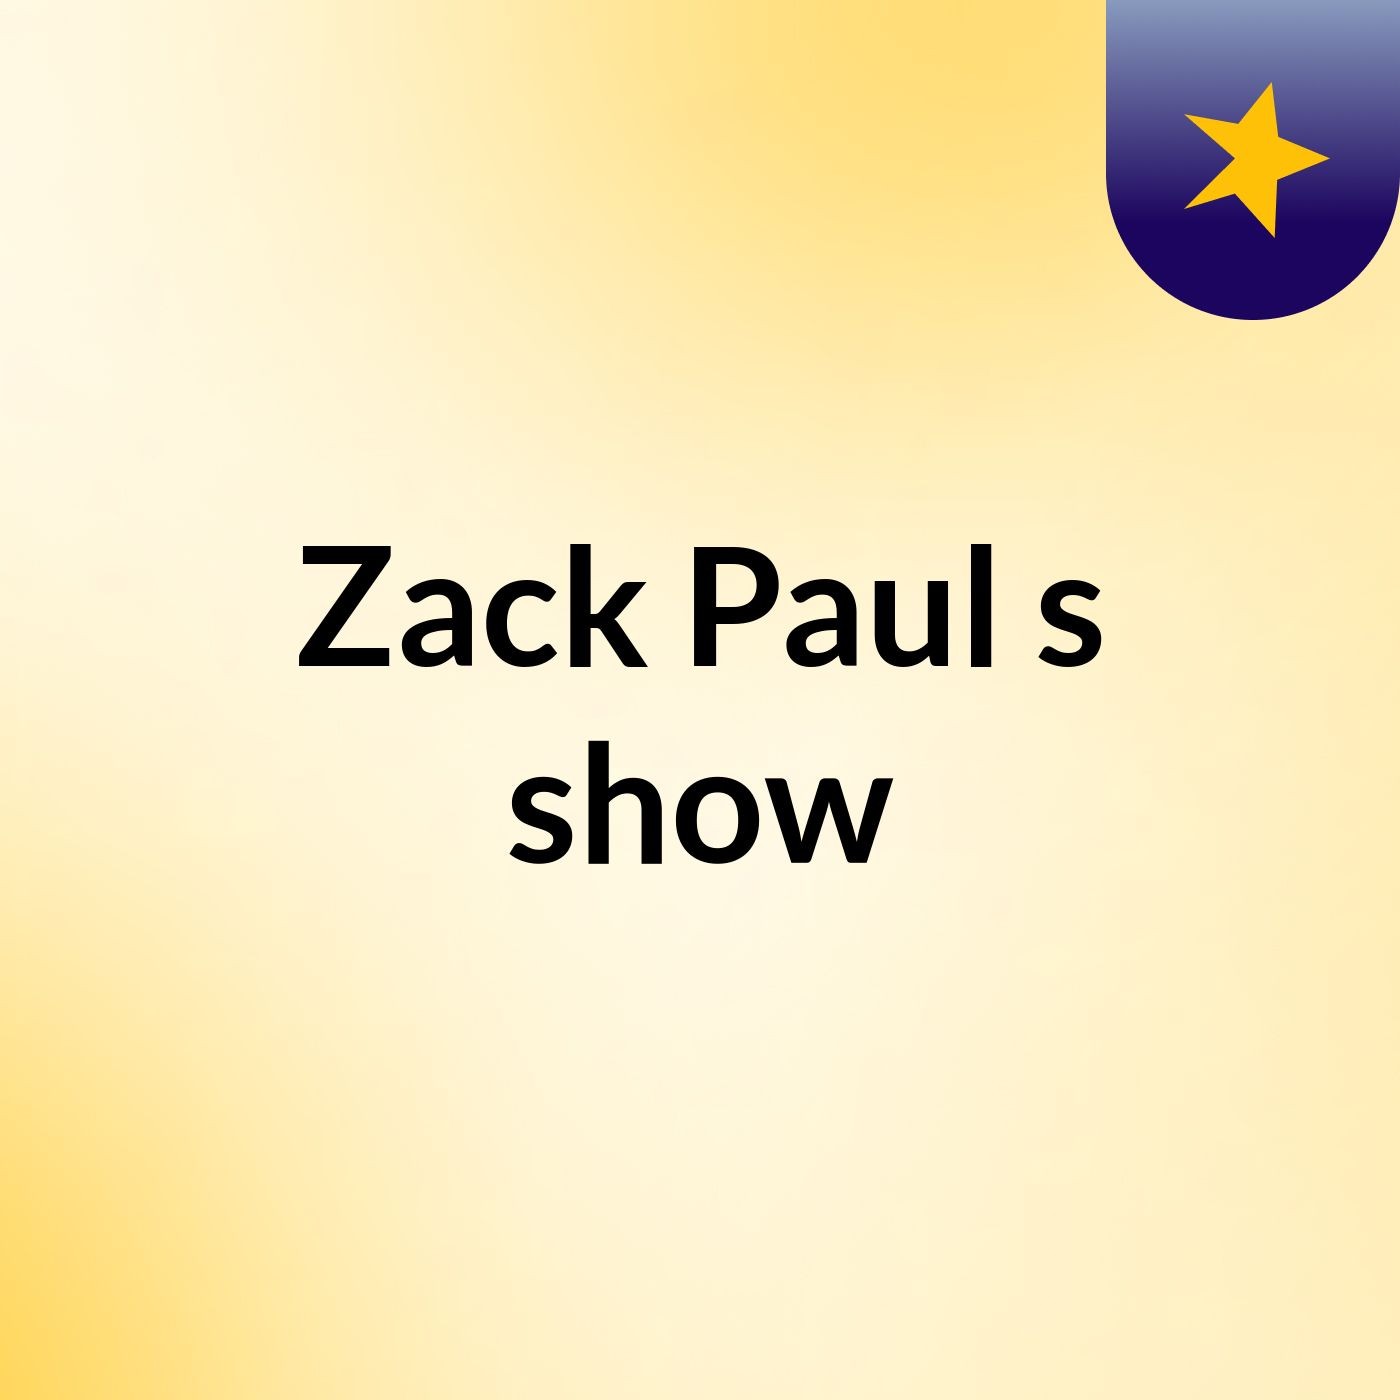 Zack Paul's show